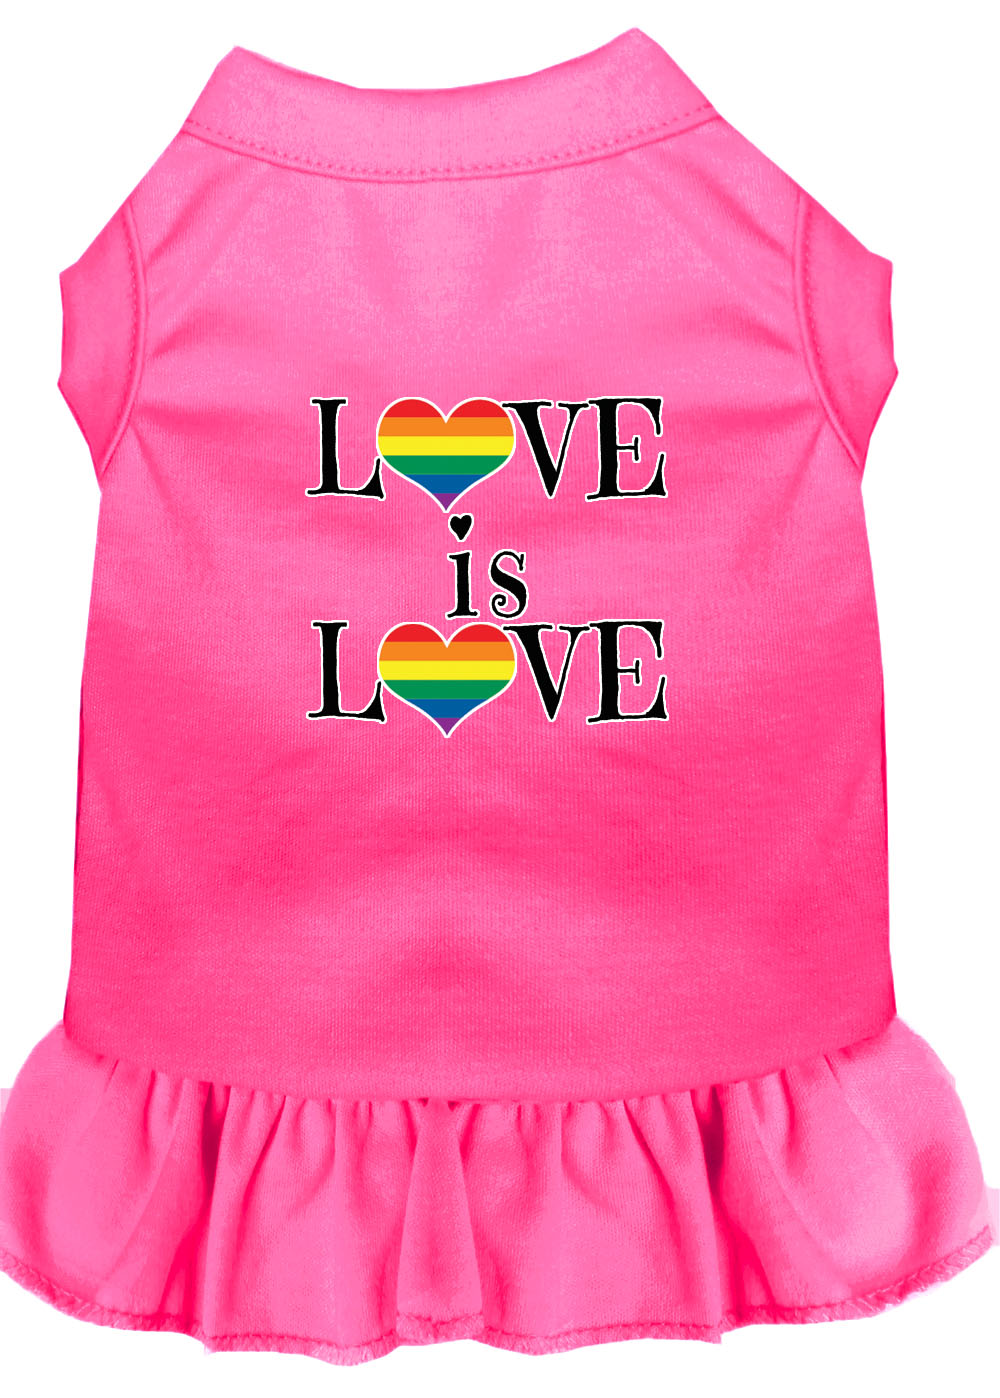 Love is Love Screen Print Dog Dress Bright Pink Sm